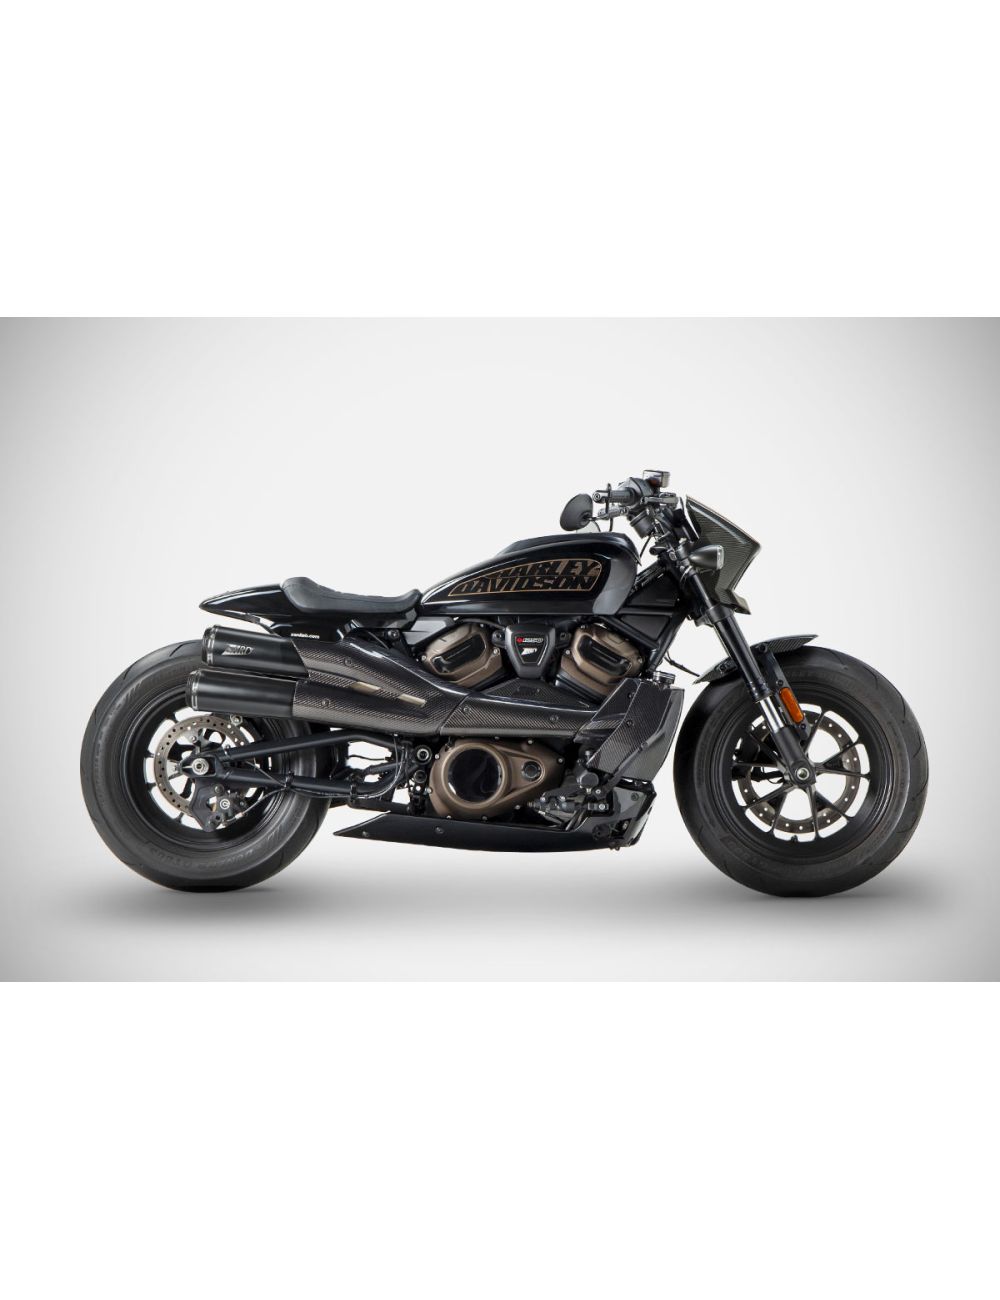 Harley-Davidson SPORTSTER S Accessorio Cupolino in carbonio